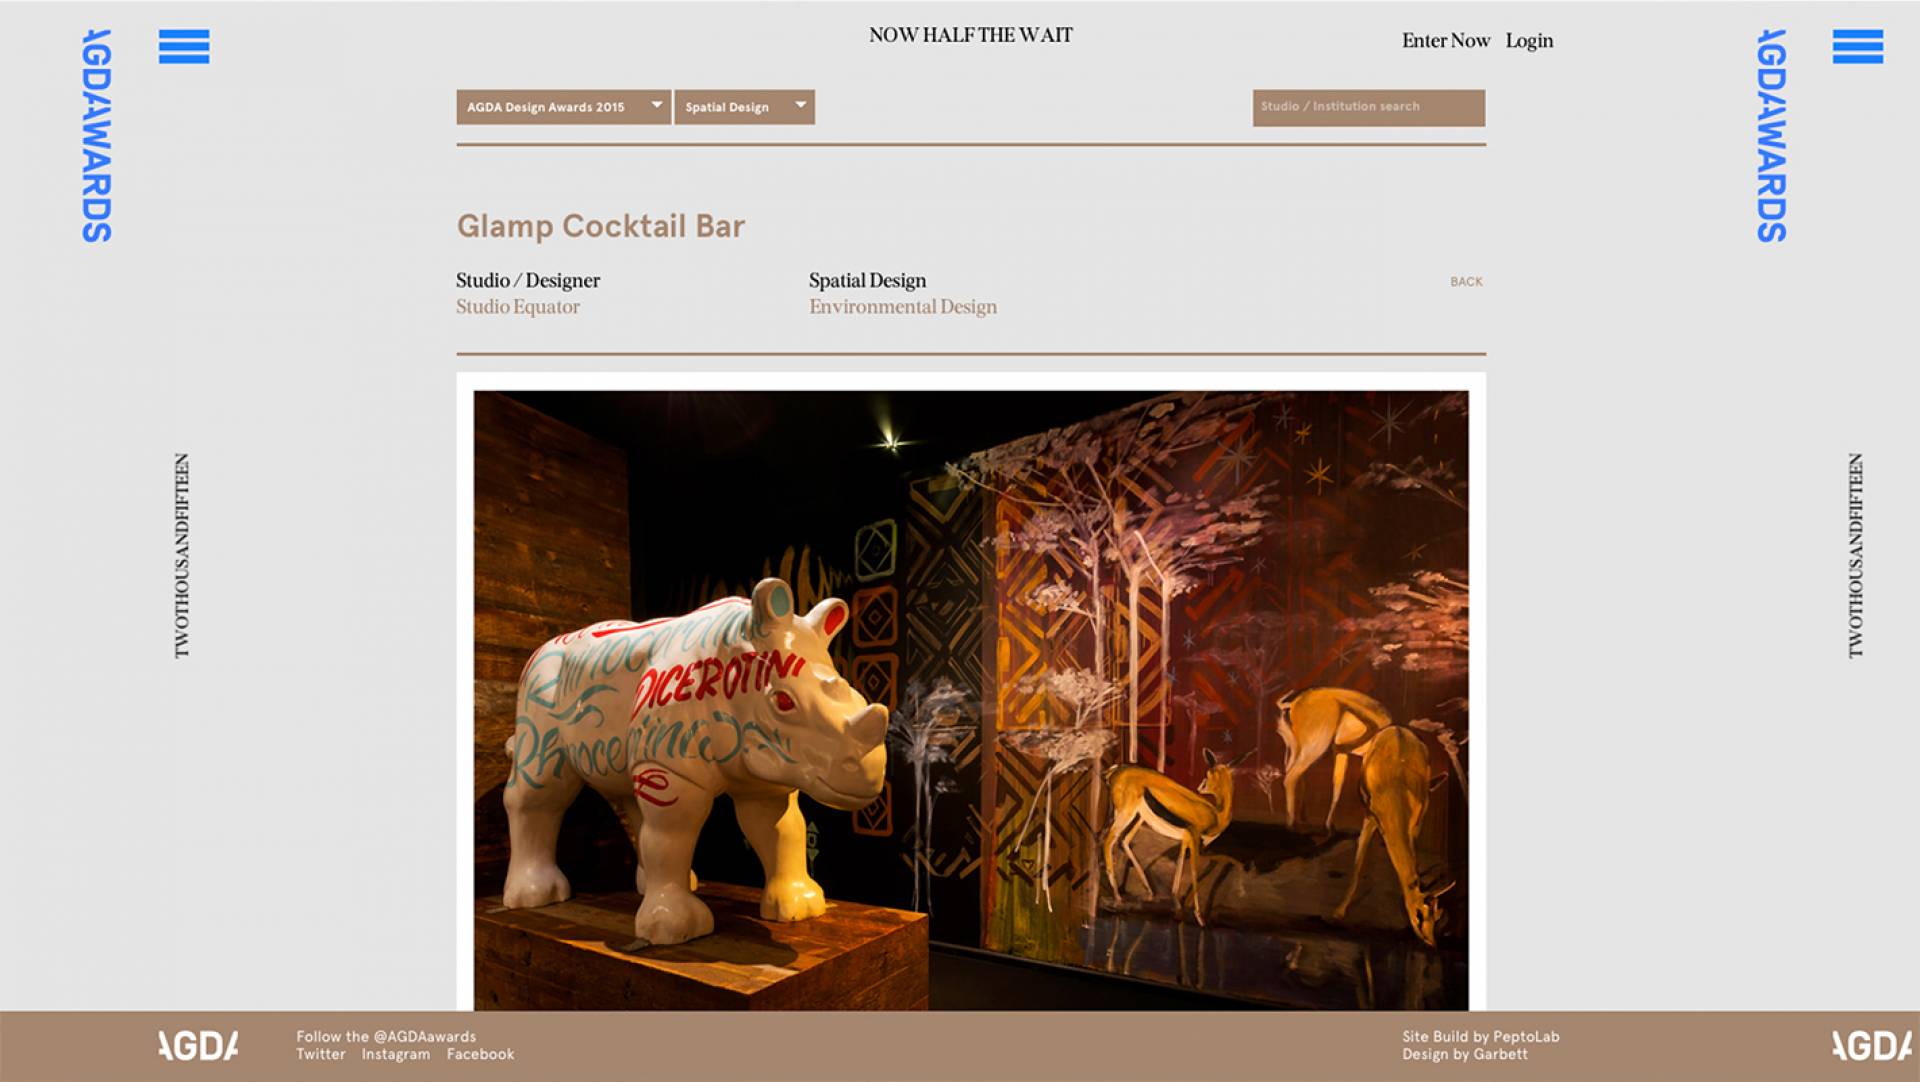 AGDA Awards 2015 Finalists Spatial Design-Glamp Cocktail Bar